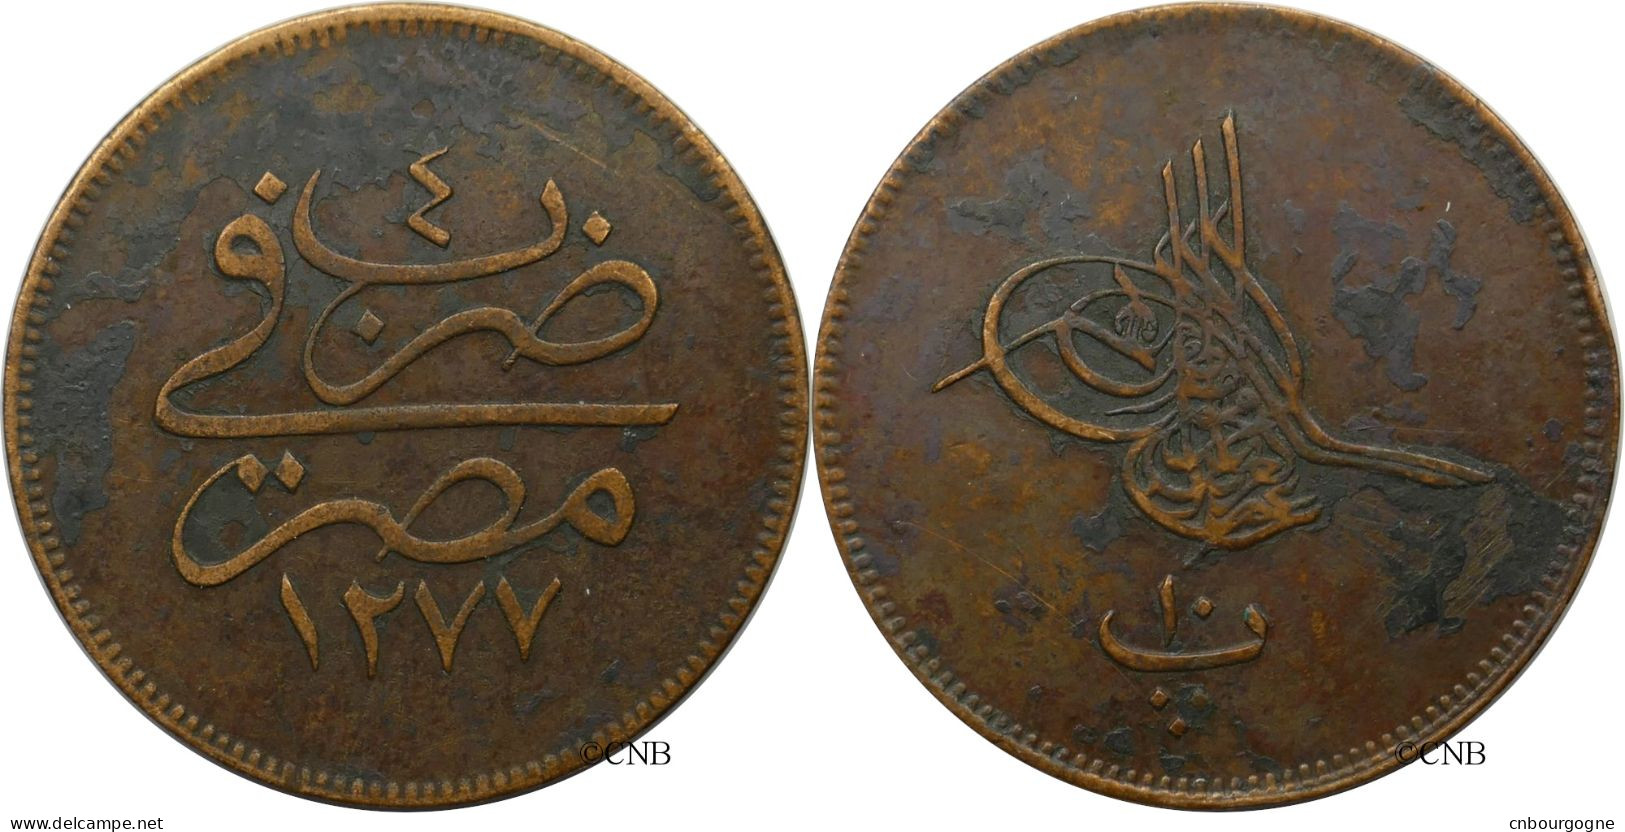 Égypte - Empire Ottoman - Abdulaziz - 10 Para AH1277/4 (1863) - TTB/XF40 - Mon6034 - Aegypten